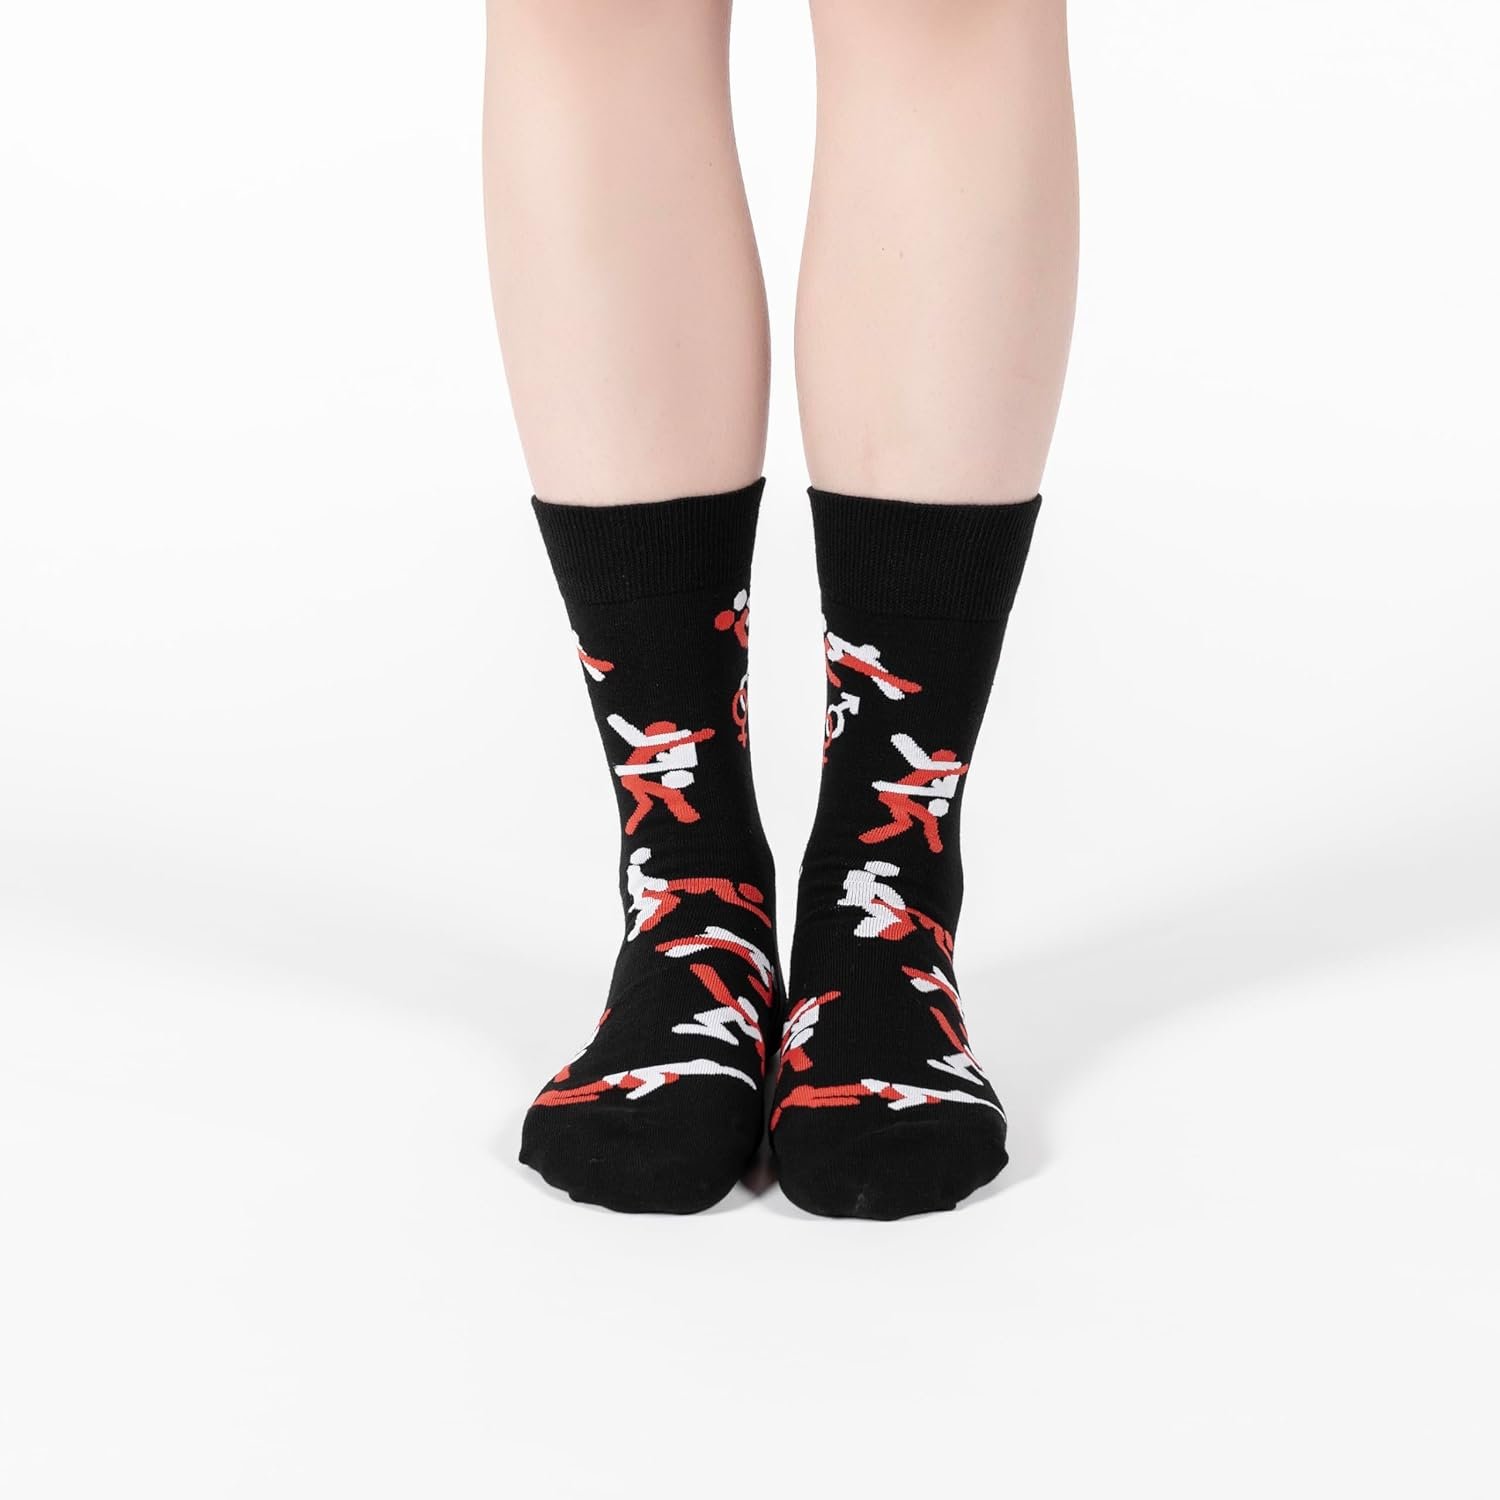 BISOUSOX Women’s Fun Dress Socks Review